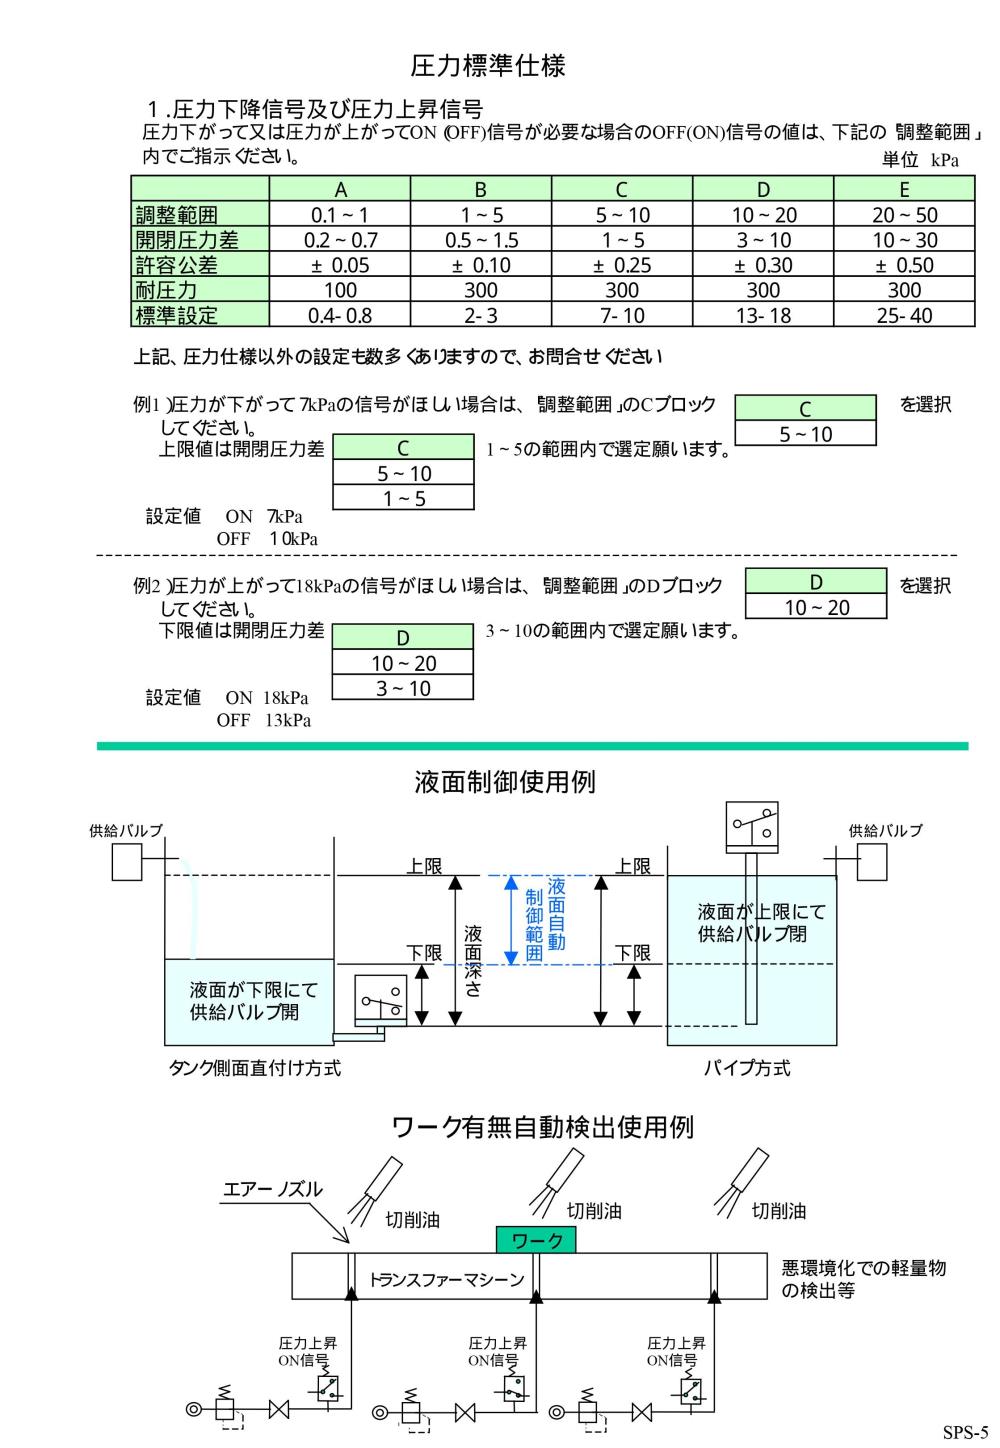 SANWA DENKI Pressure Switch SPS-5, SUS-304 Series